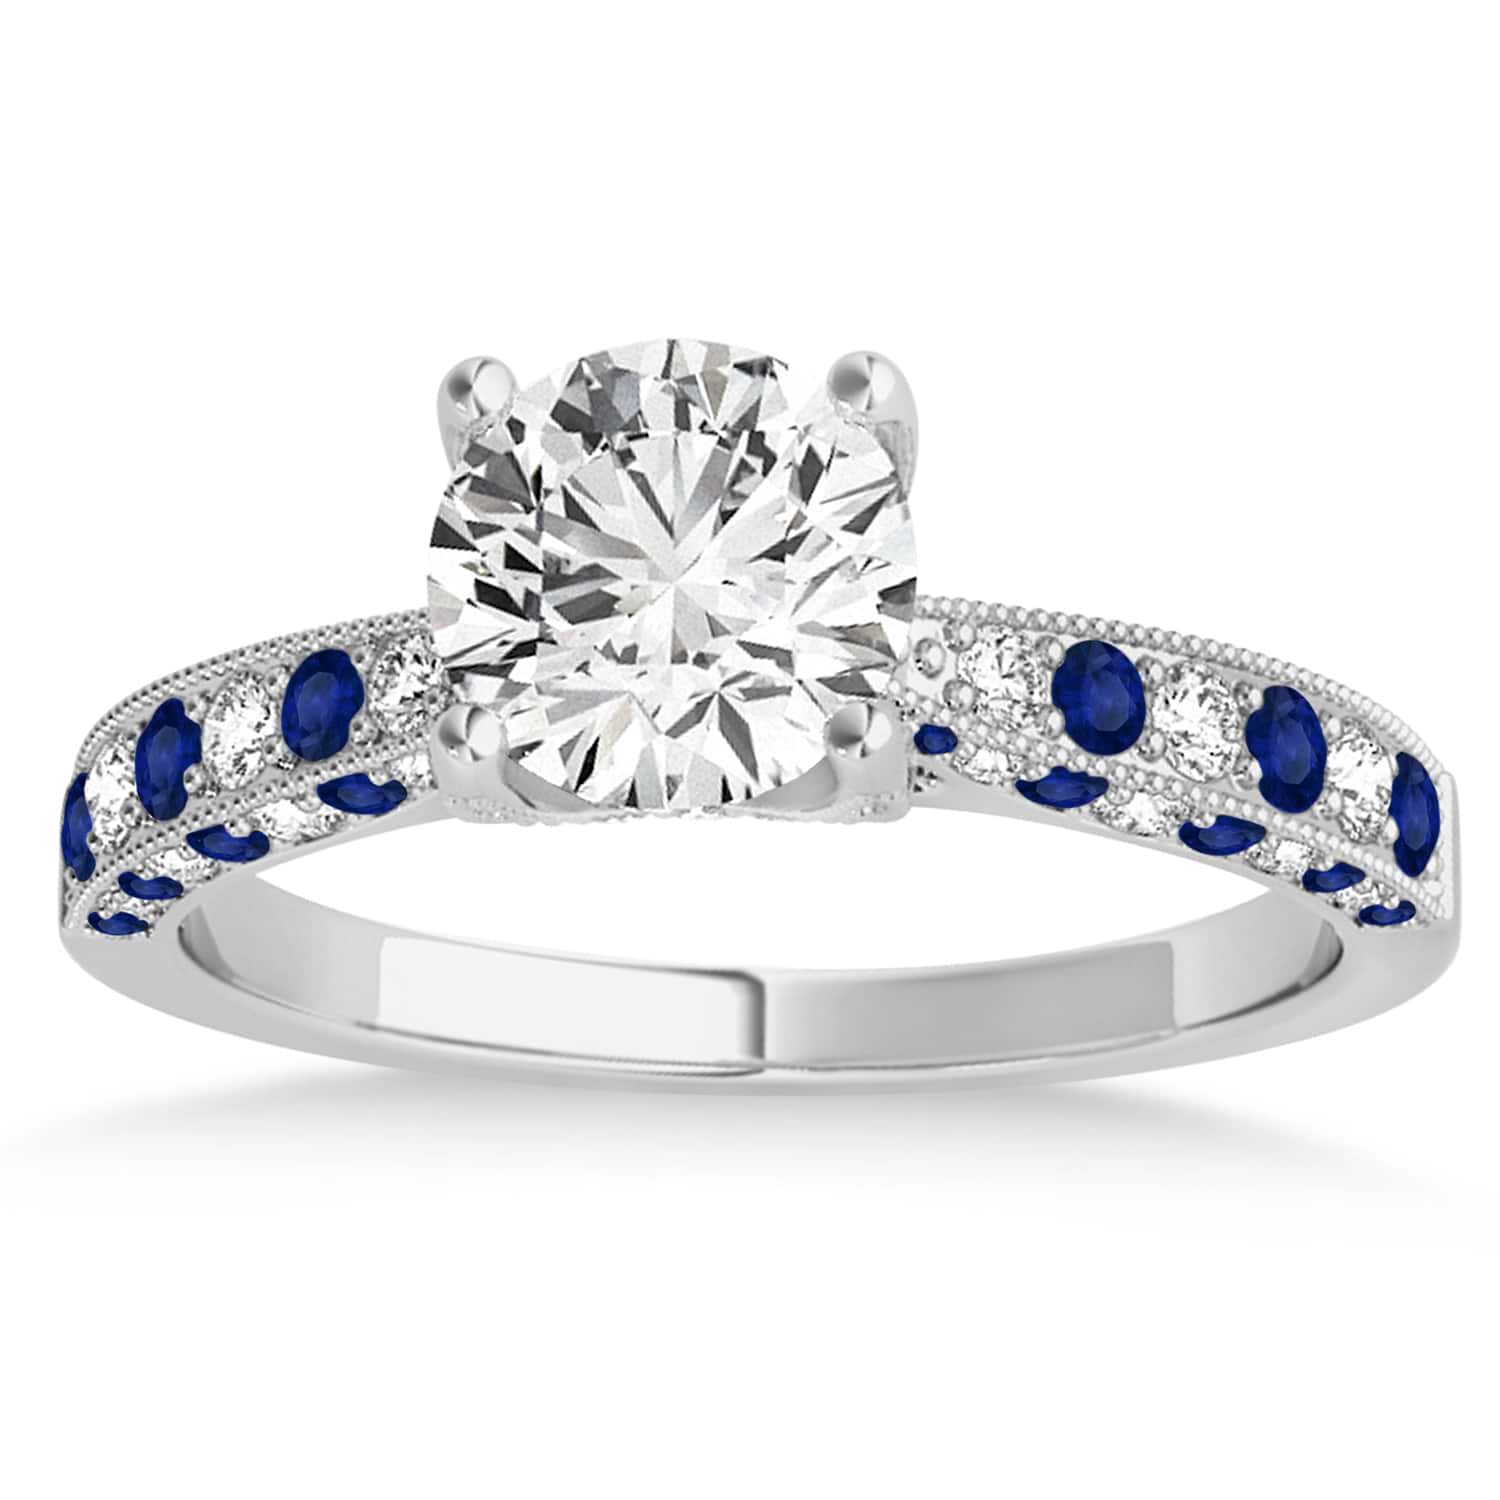 Alternating Diamond & Blue Sapphire Engravable Engagement Ring in Palladium (0.45ct)